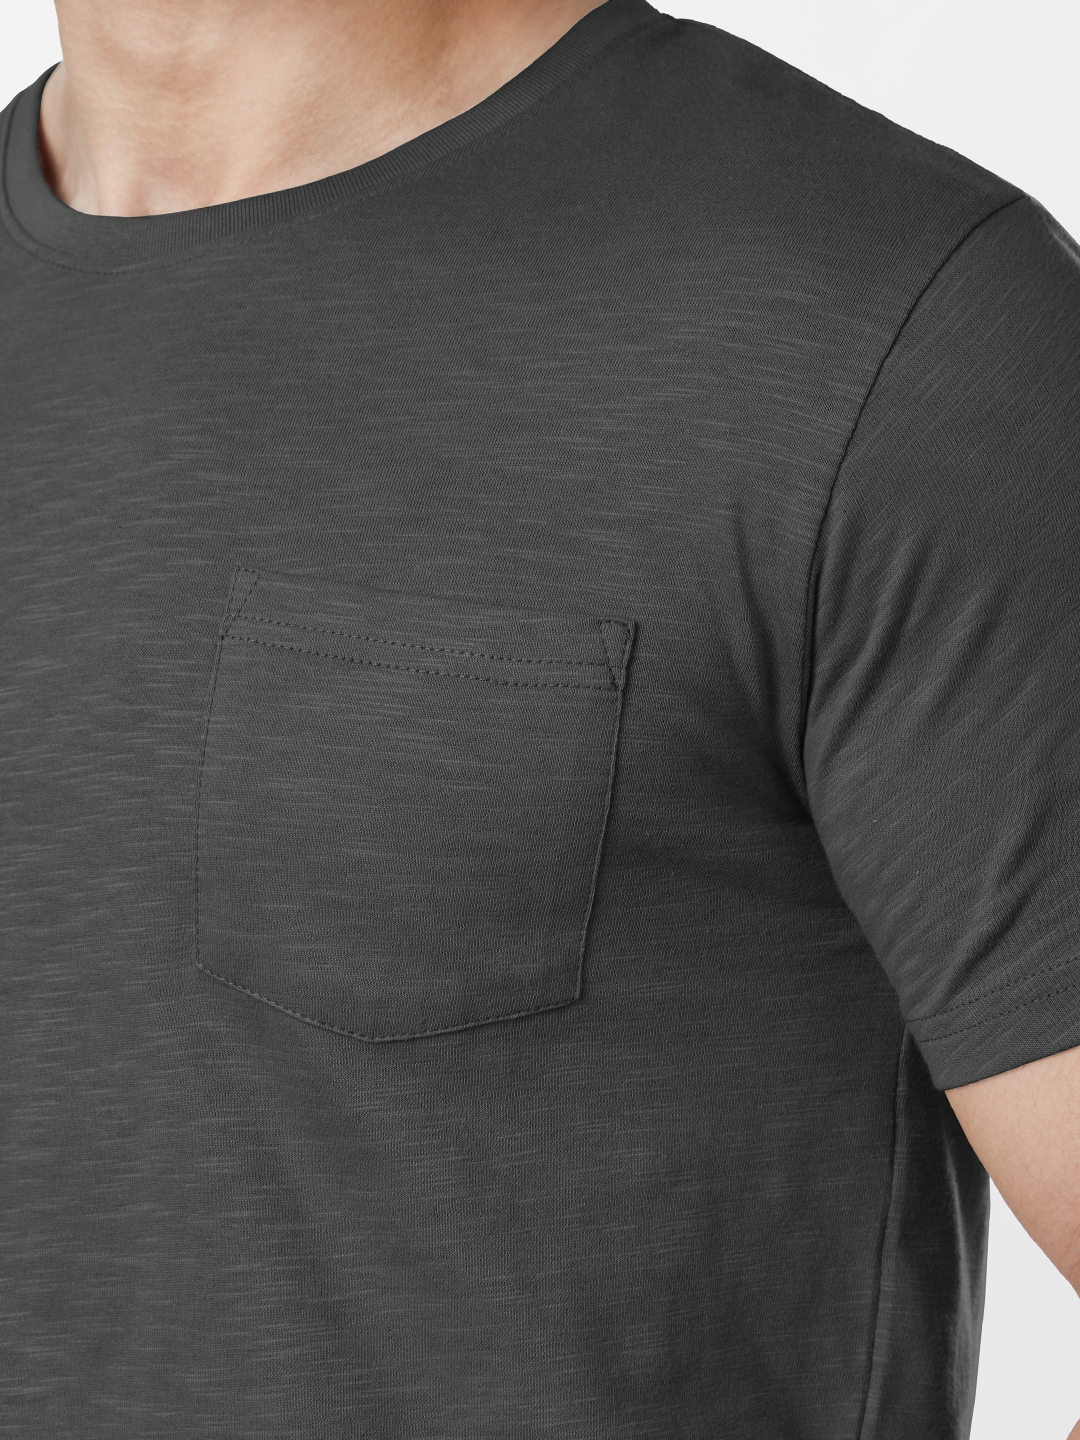 Men's Solids Slub: Steel Grey T-Shirt